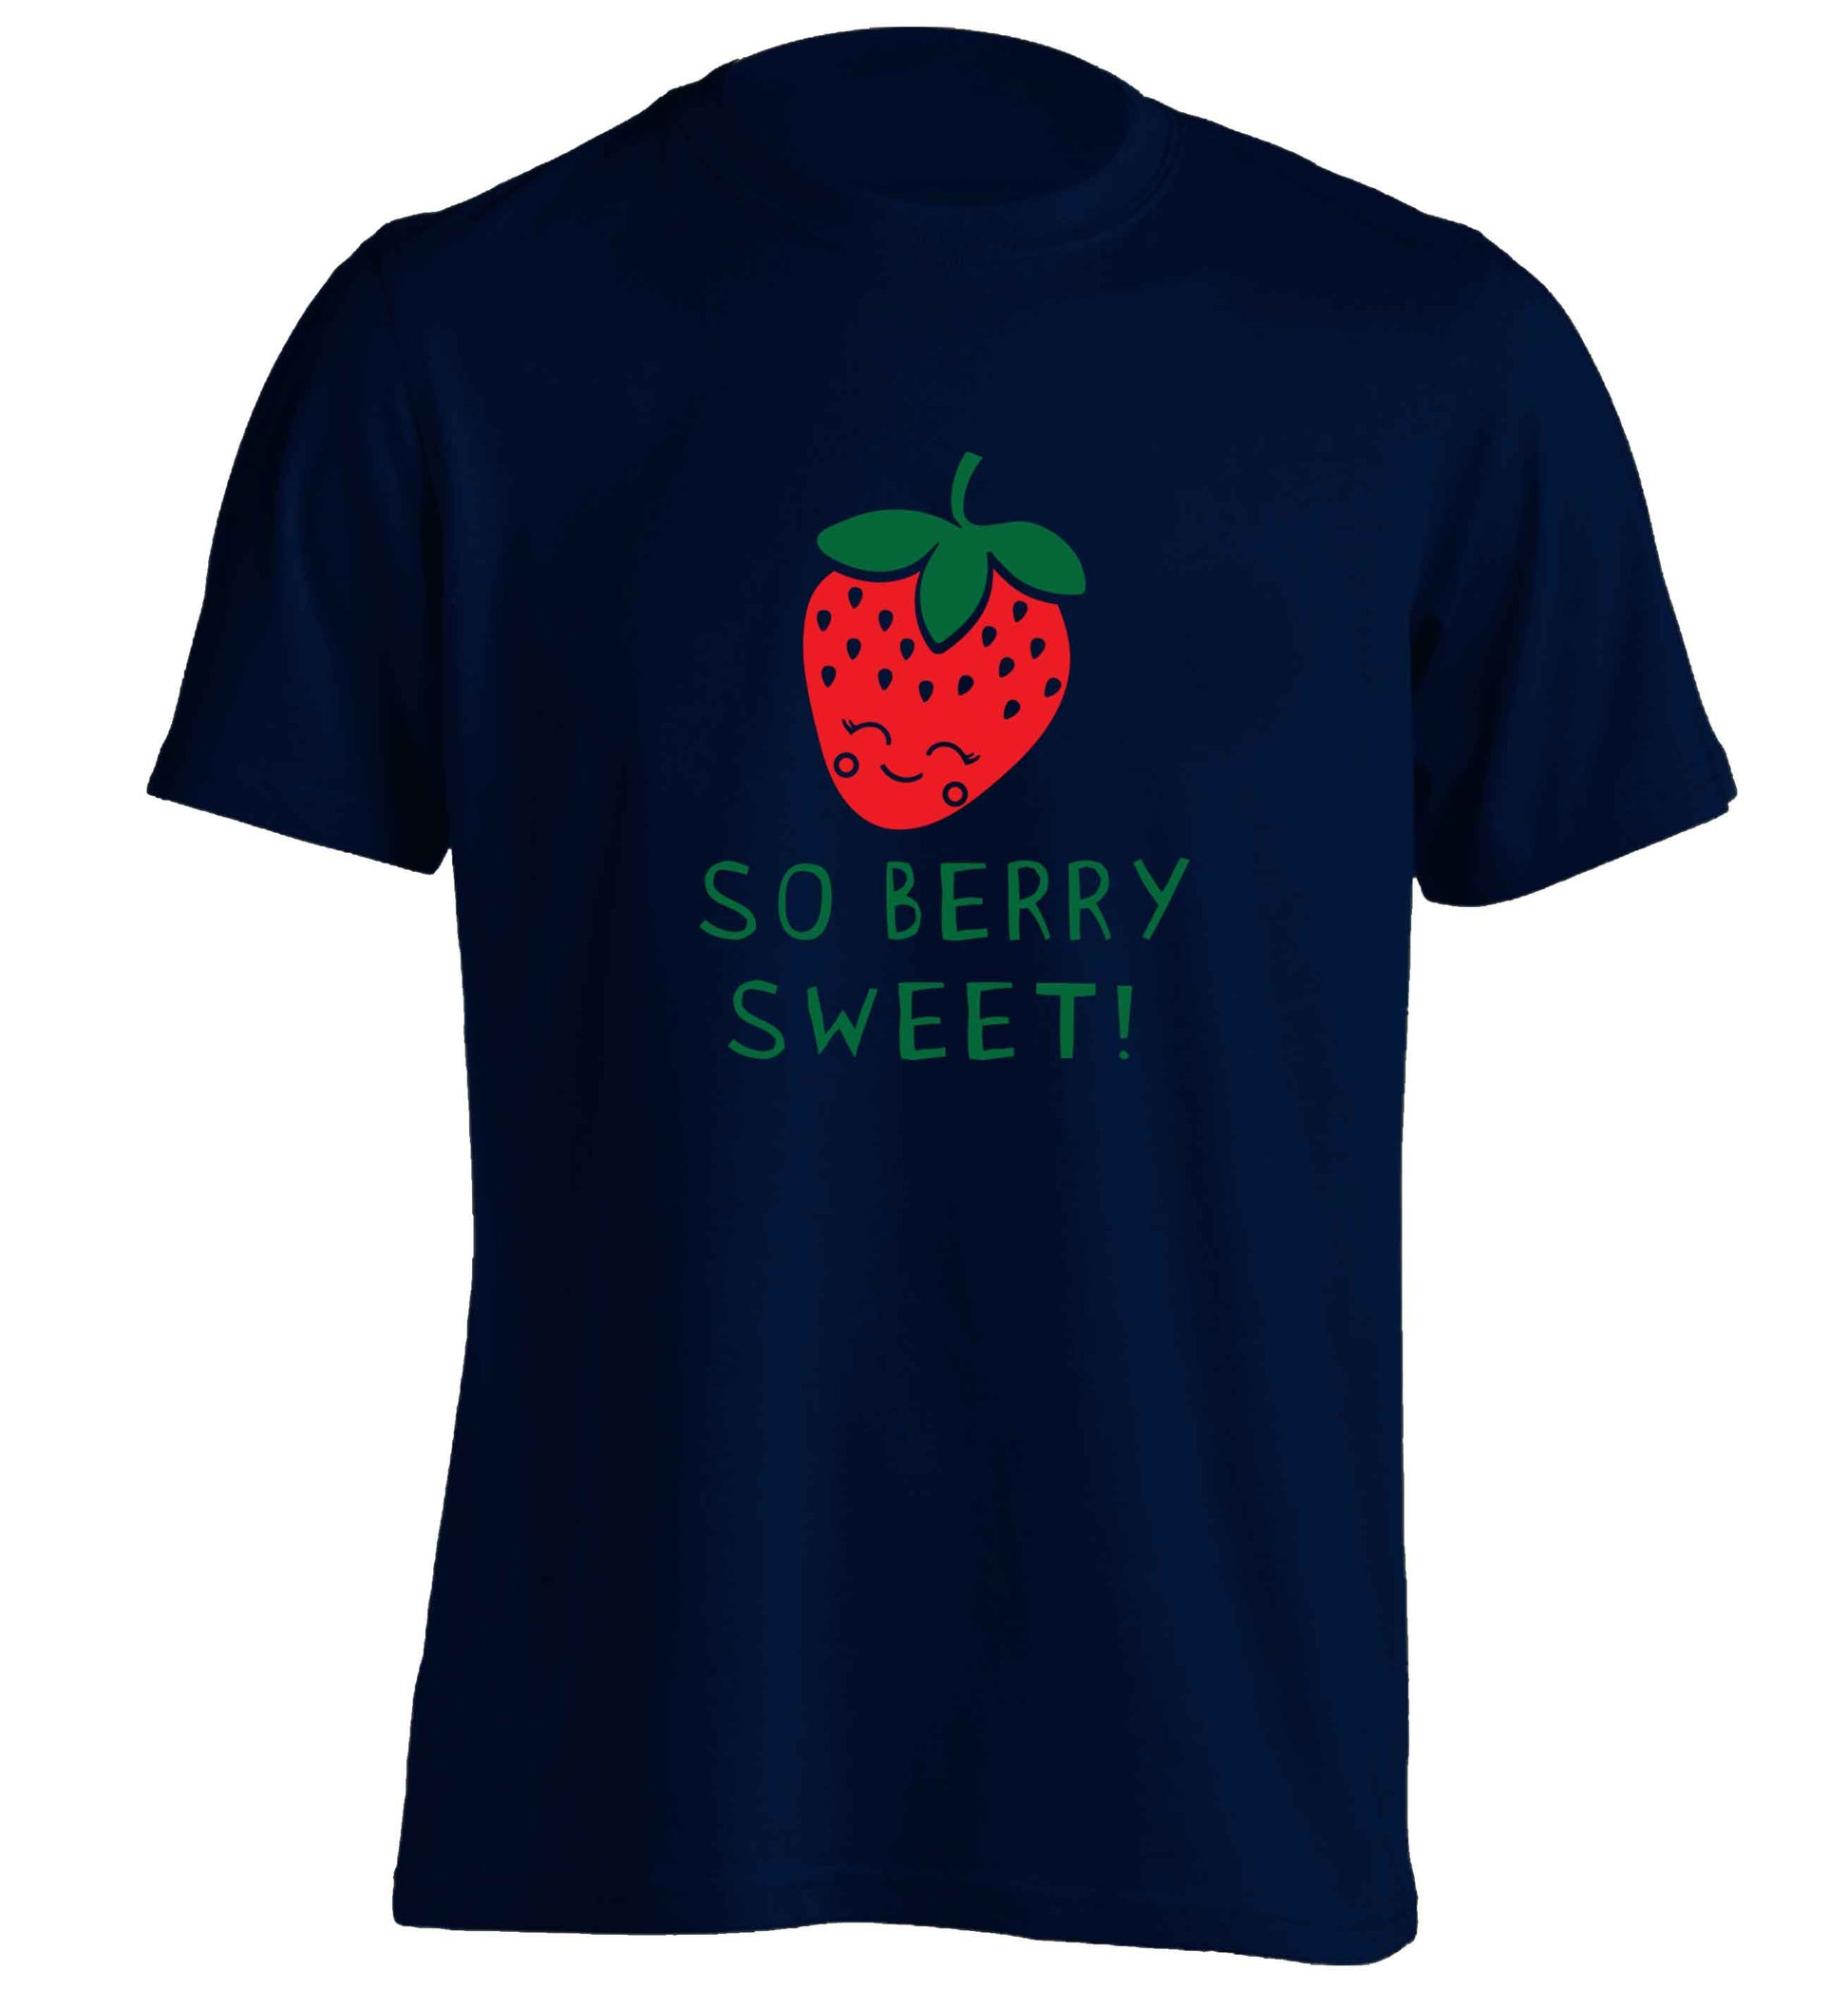 So berry sweet adults unisex navy Tshirt 2XL